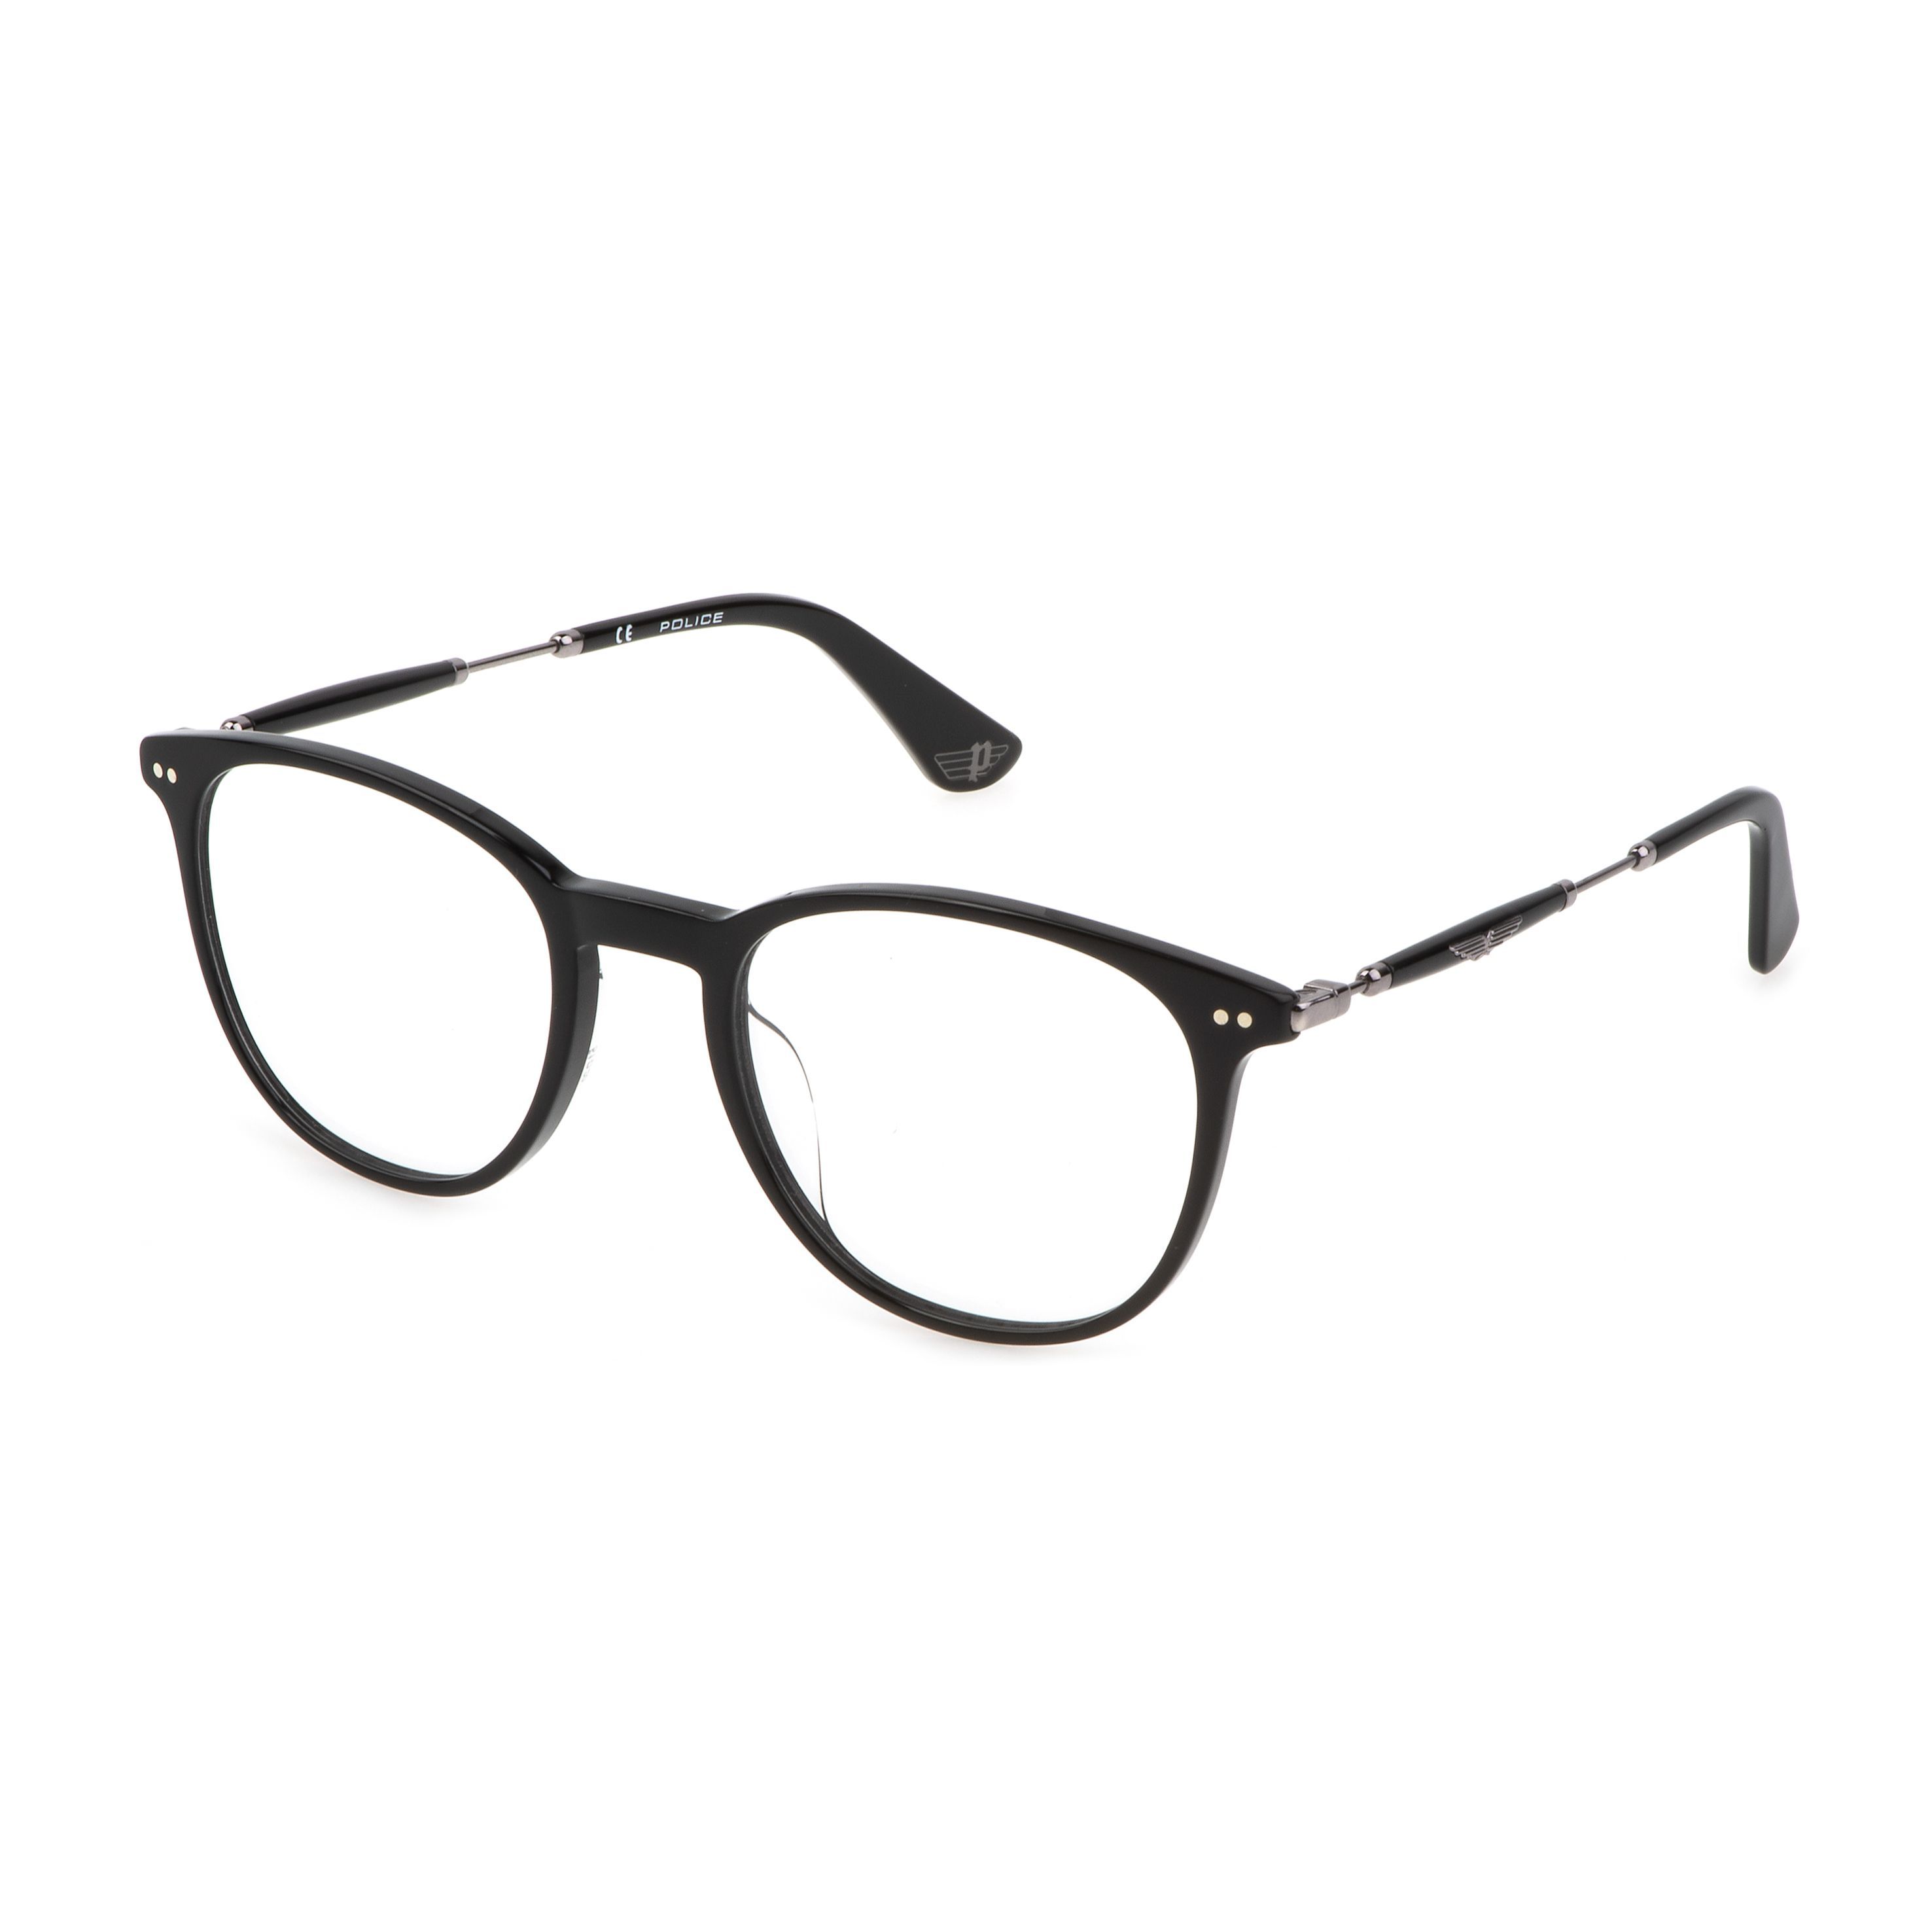 VPLE99M Panthos Eyeglasses 700 - size  51